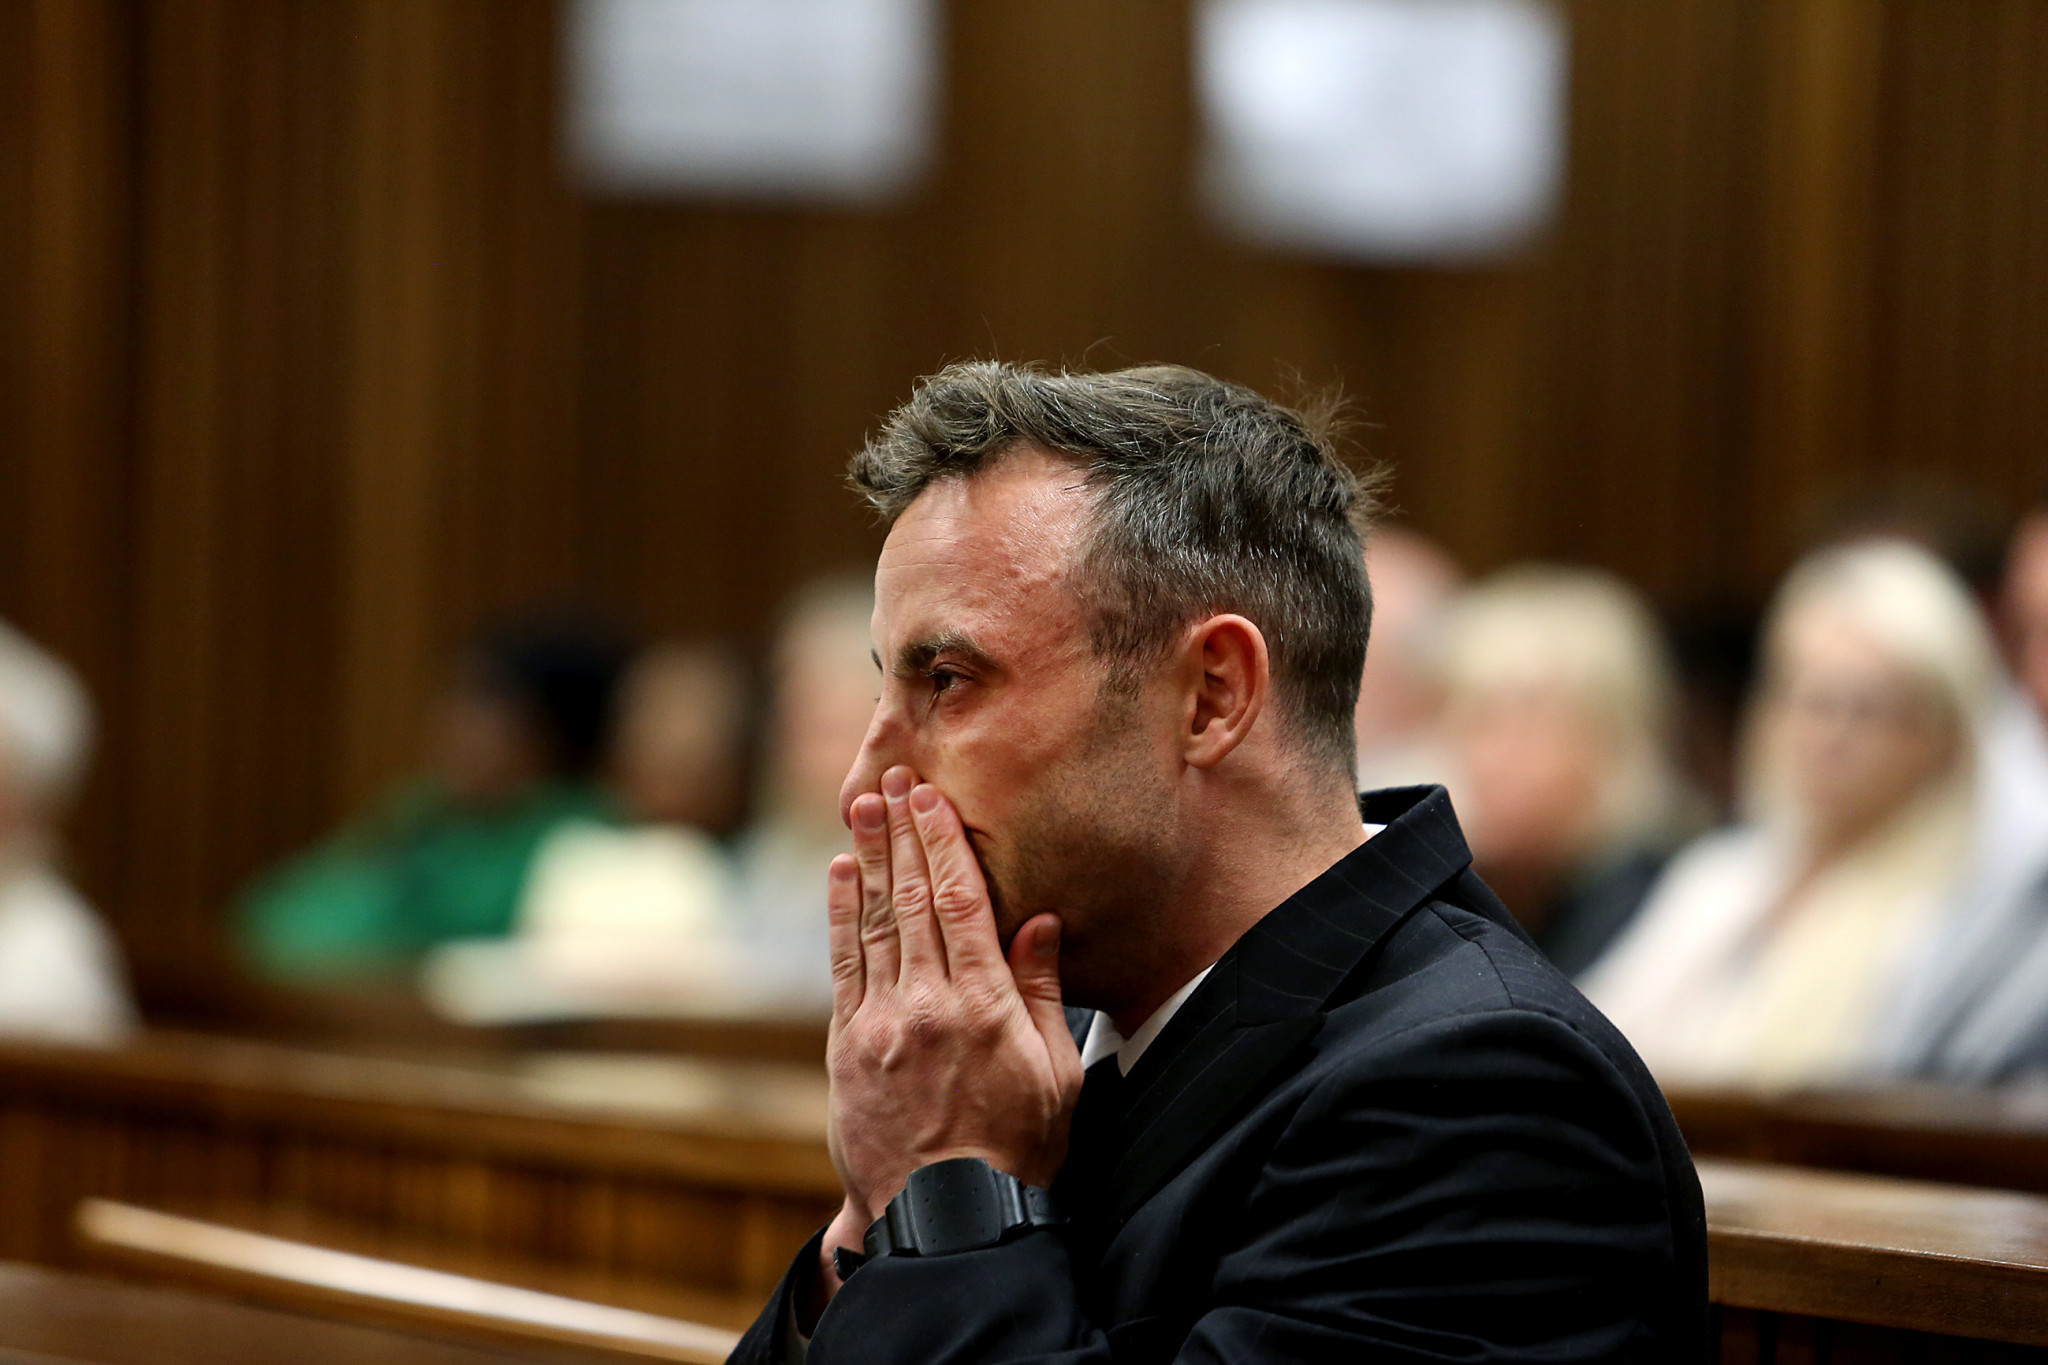 Date set for Oscar Pistorius parole hearing